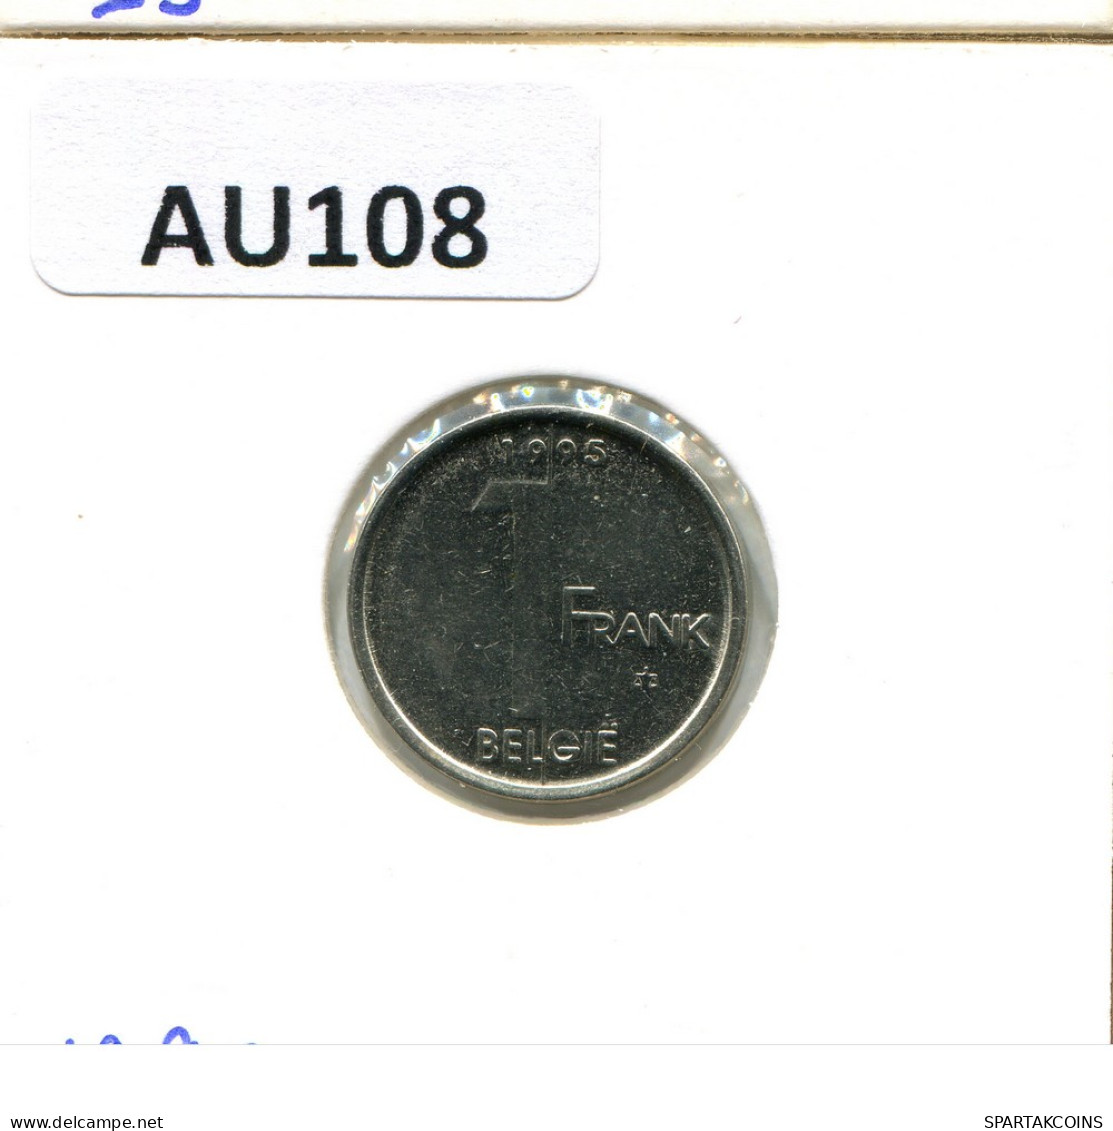 1 FRANC 1995 DUTCH Text BELGIUM Coin #AU108.U - 1 Franc